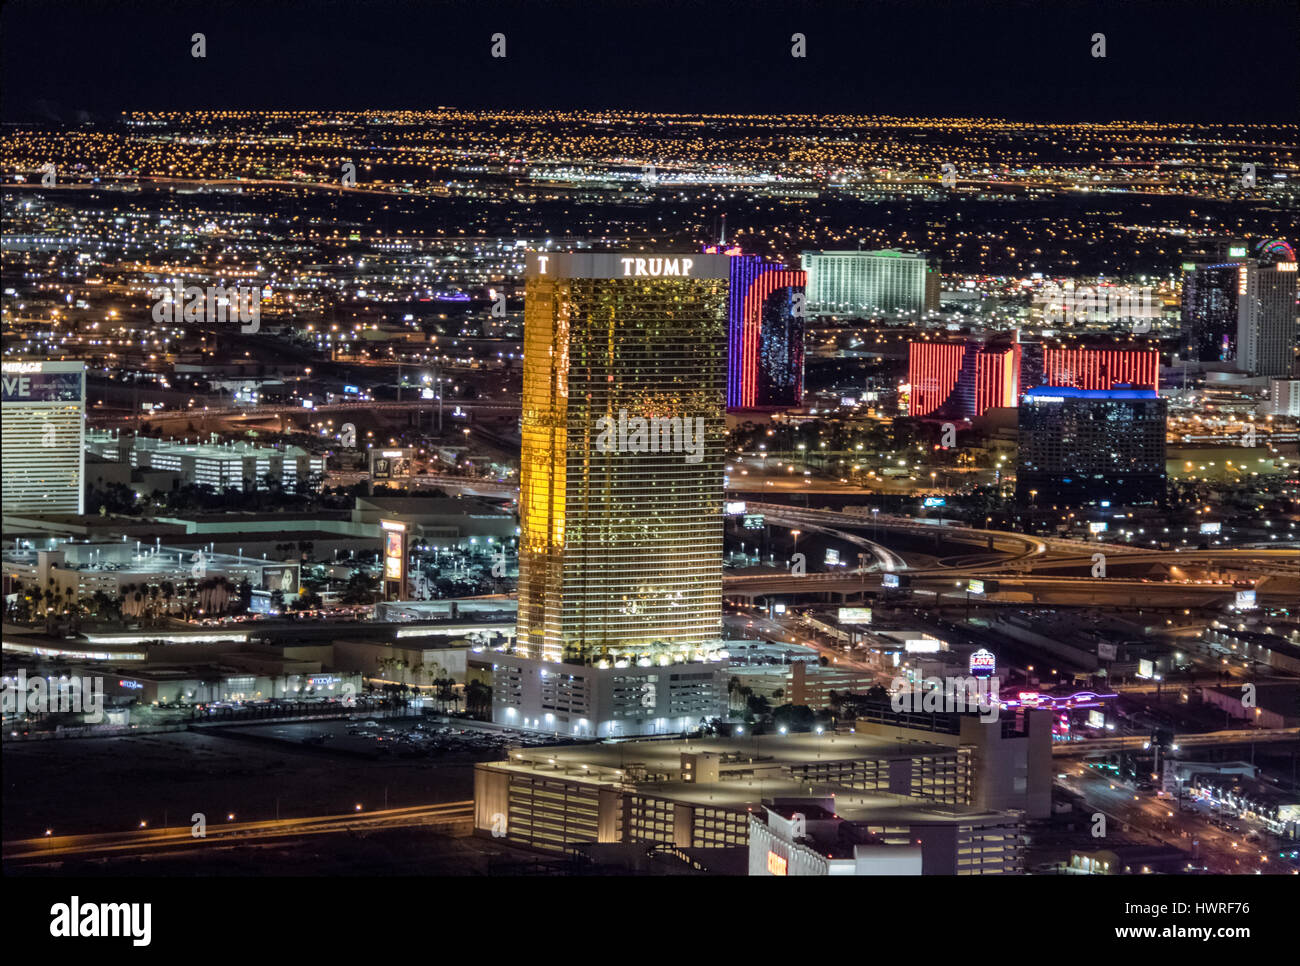 Aerial view of the Trump Hotel at night - Las Vegas, Nevada, USA Stock Photo